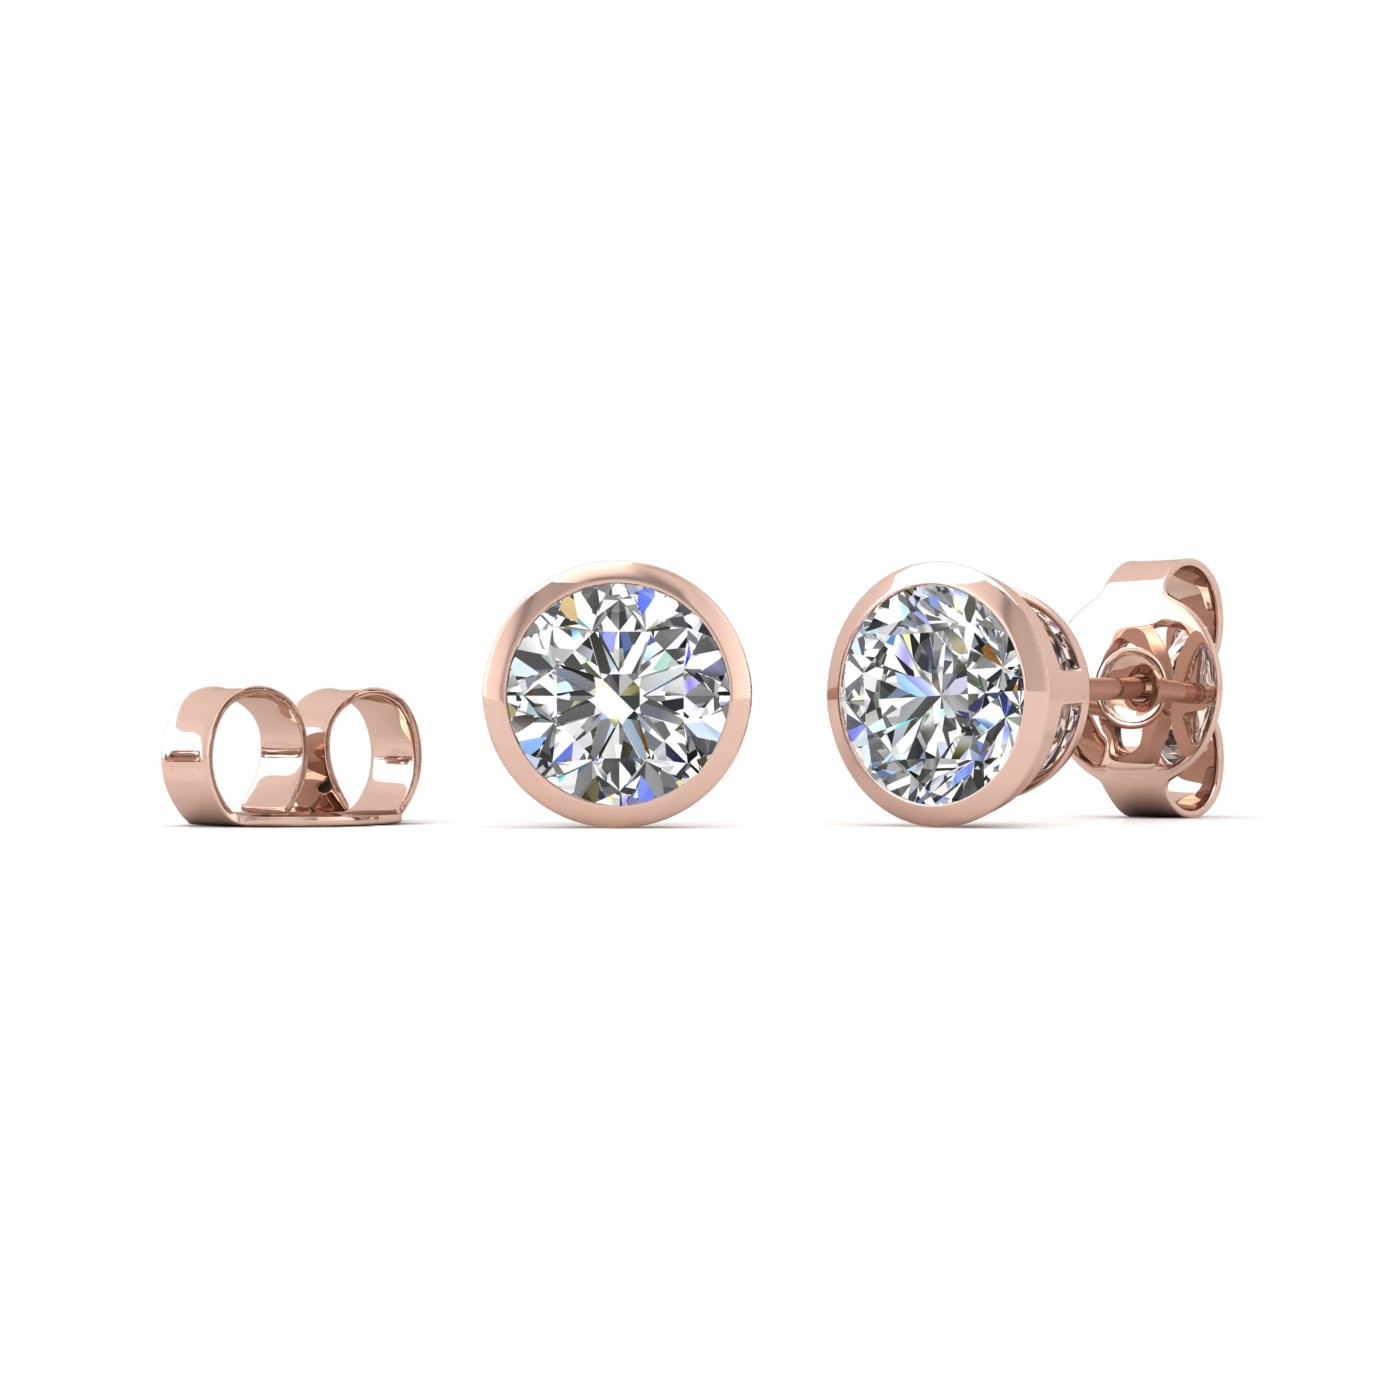 18k white gold 0,5 ct each (1,0 tcw) round brilliant cut diamond bezel set earring studs Photos & images